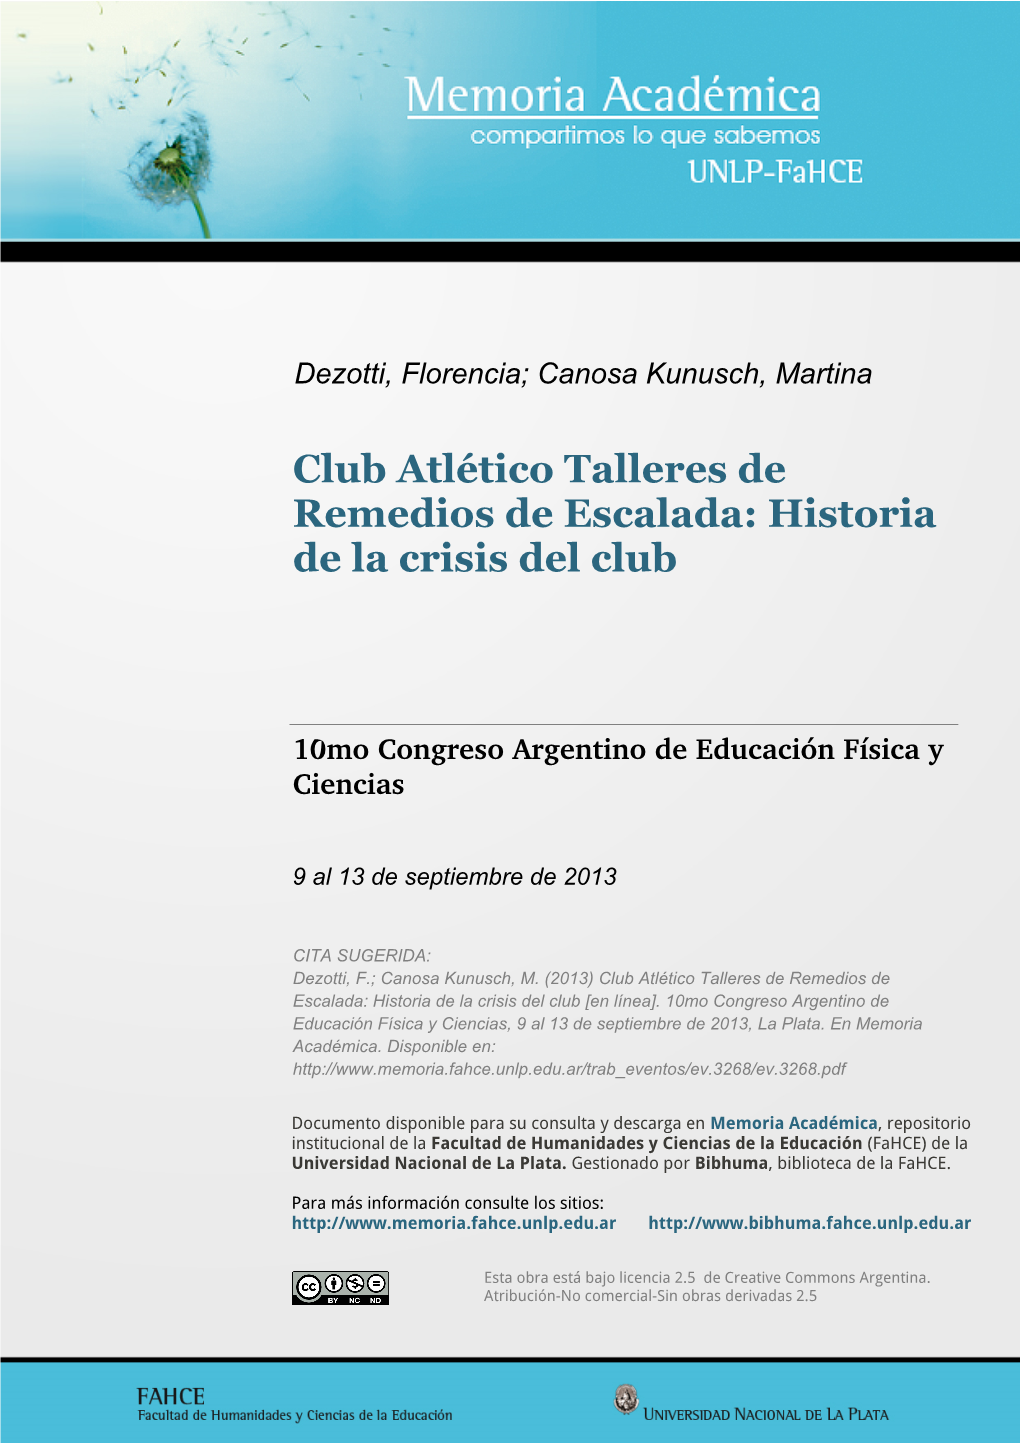 Club Atlético Talleres De Remedios De Escalada: Historia De La Crisis Del Club